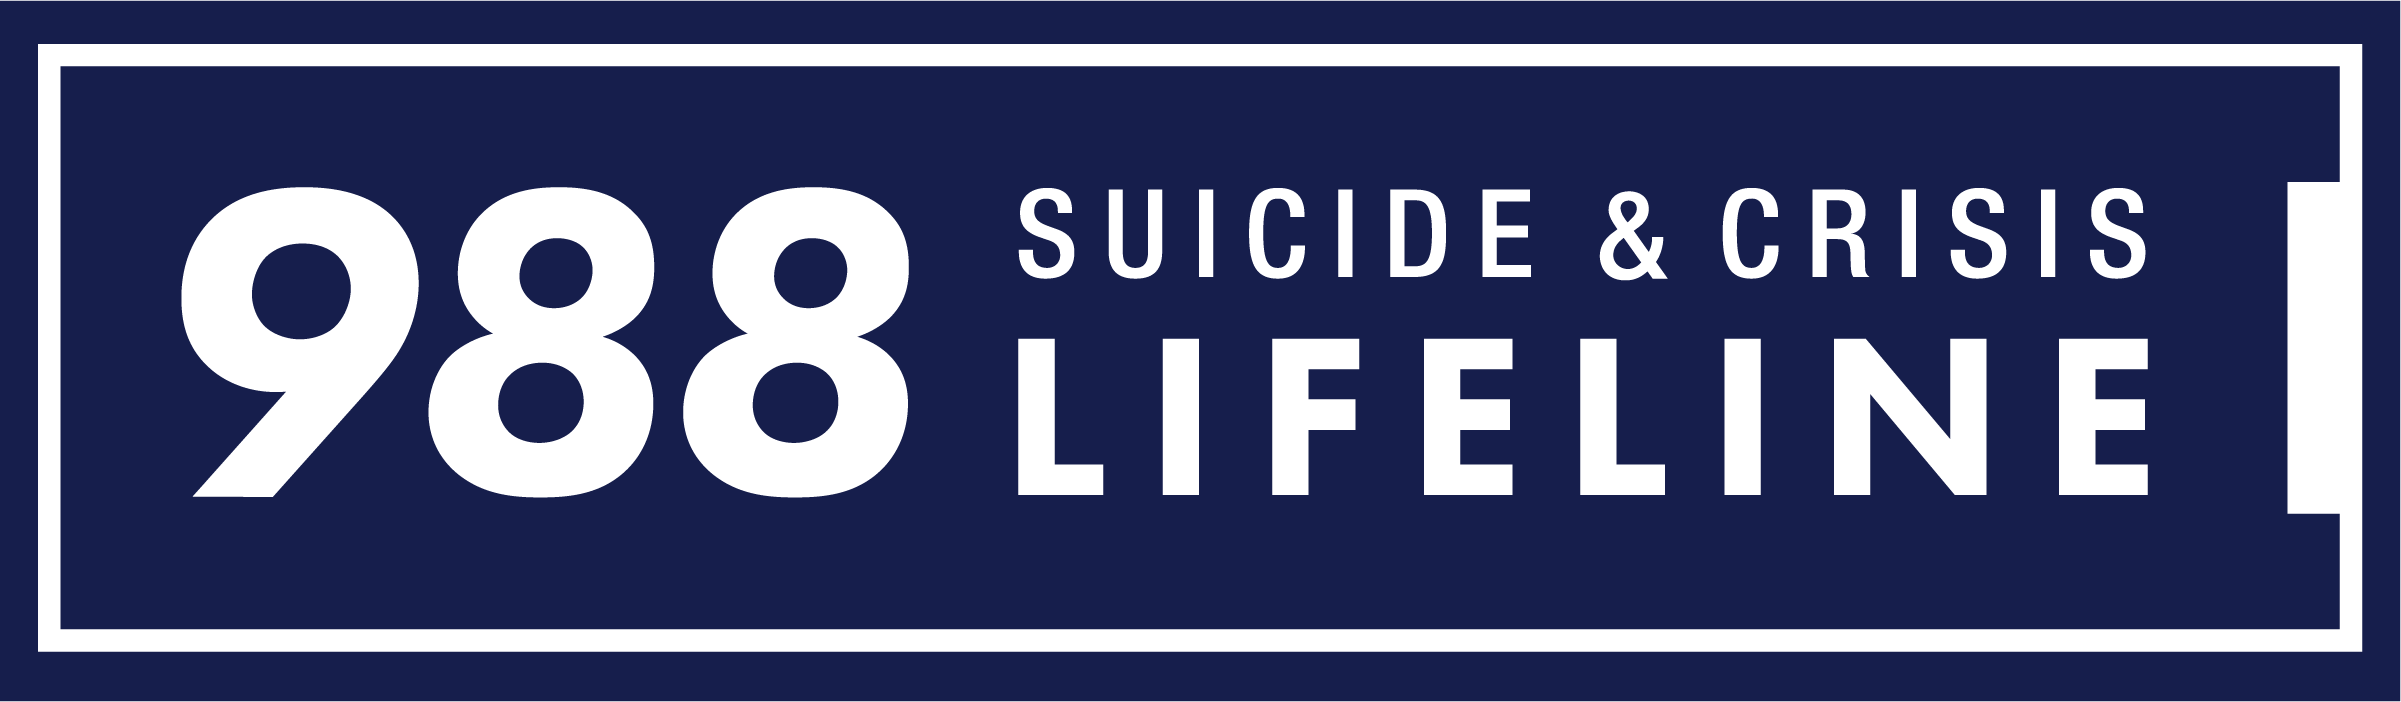 988 Suicide & Crisis Lifeline logo (navy horizontal)